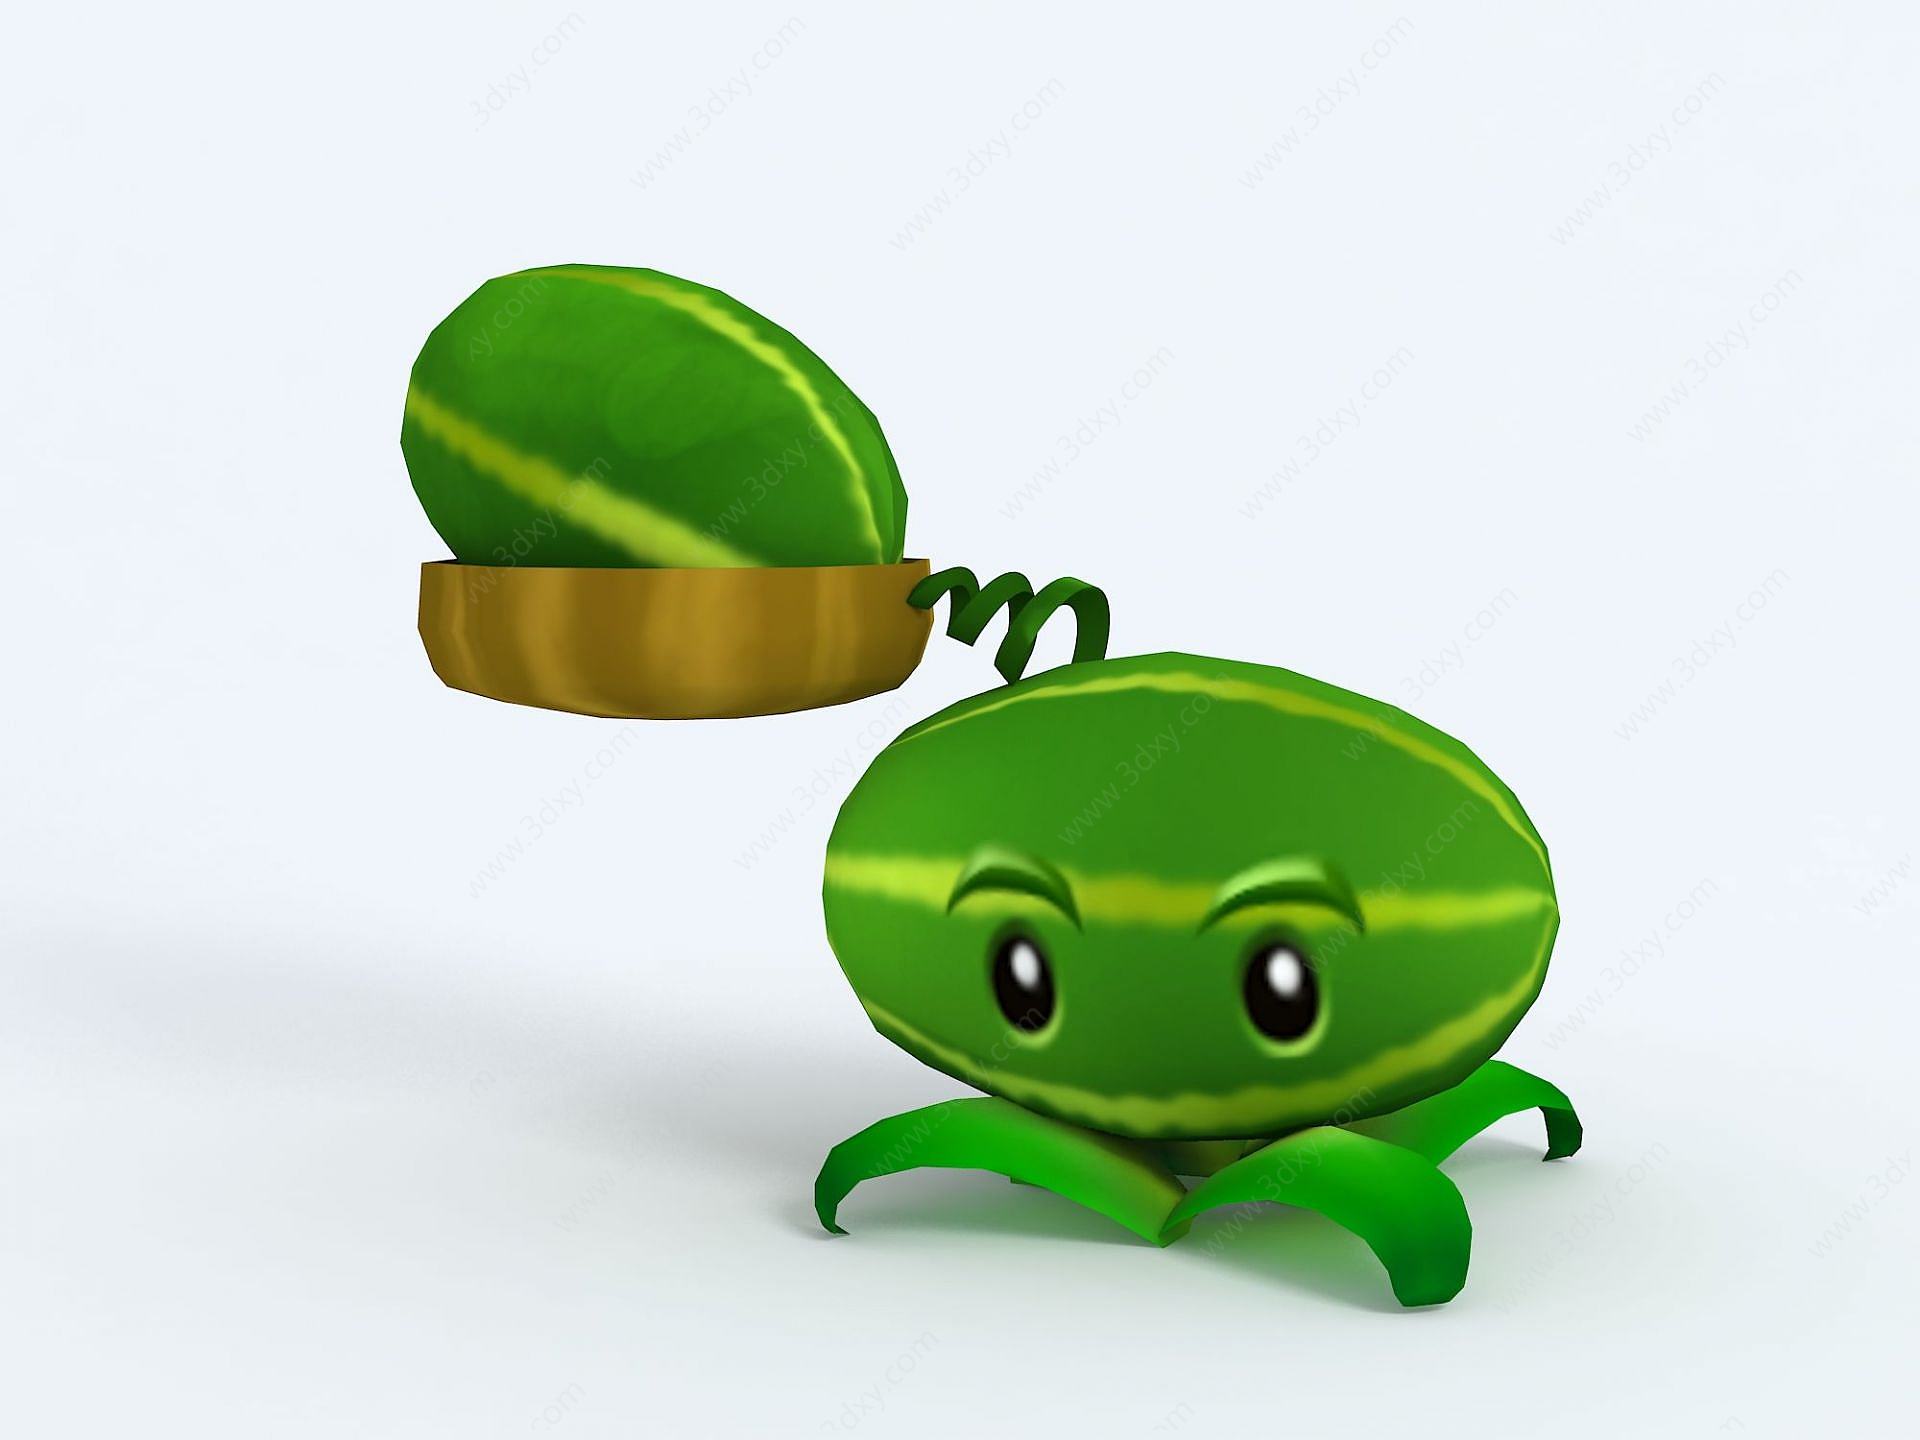 Melon-pult西瓜投掷机3D模型